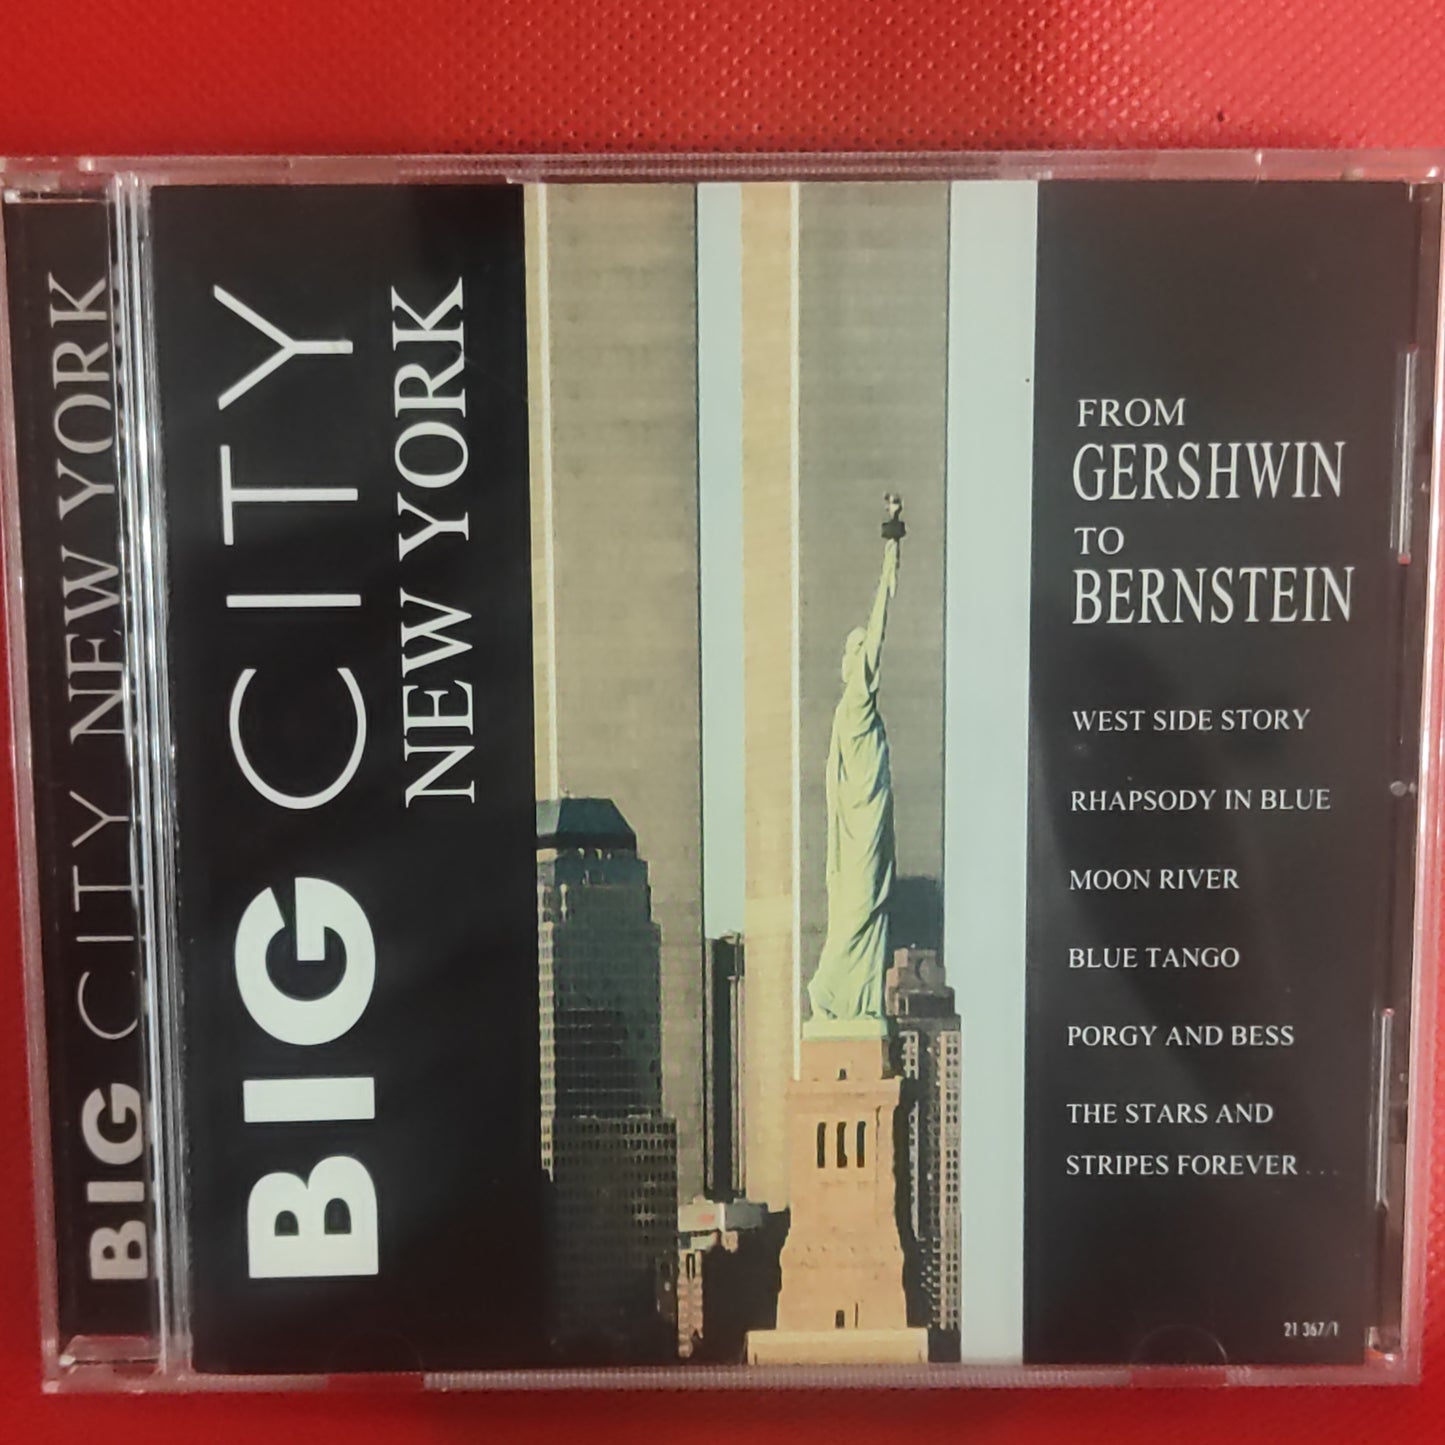 Big City - New York